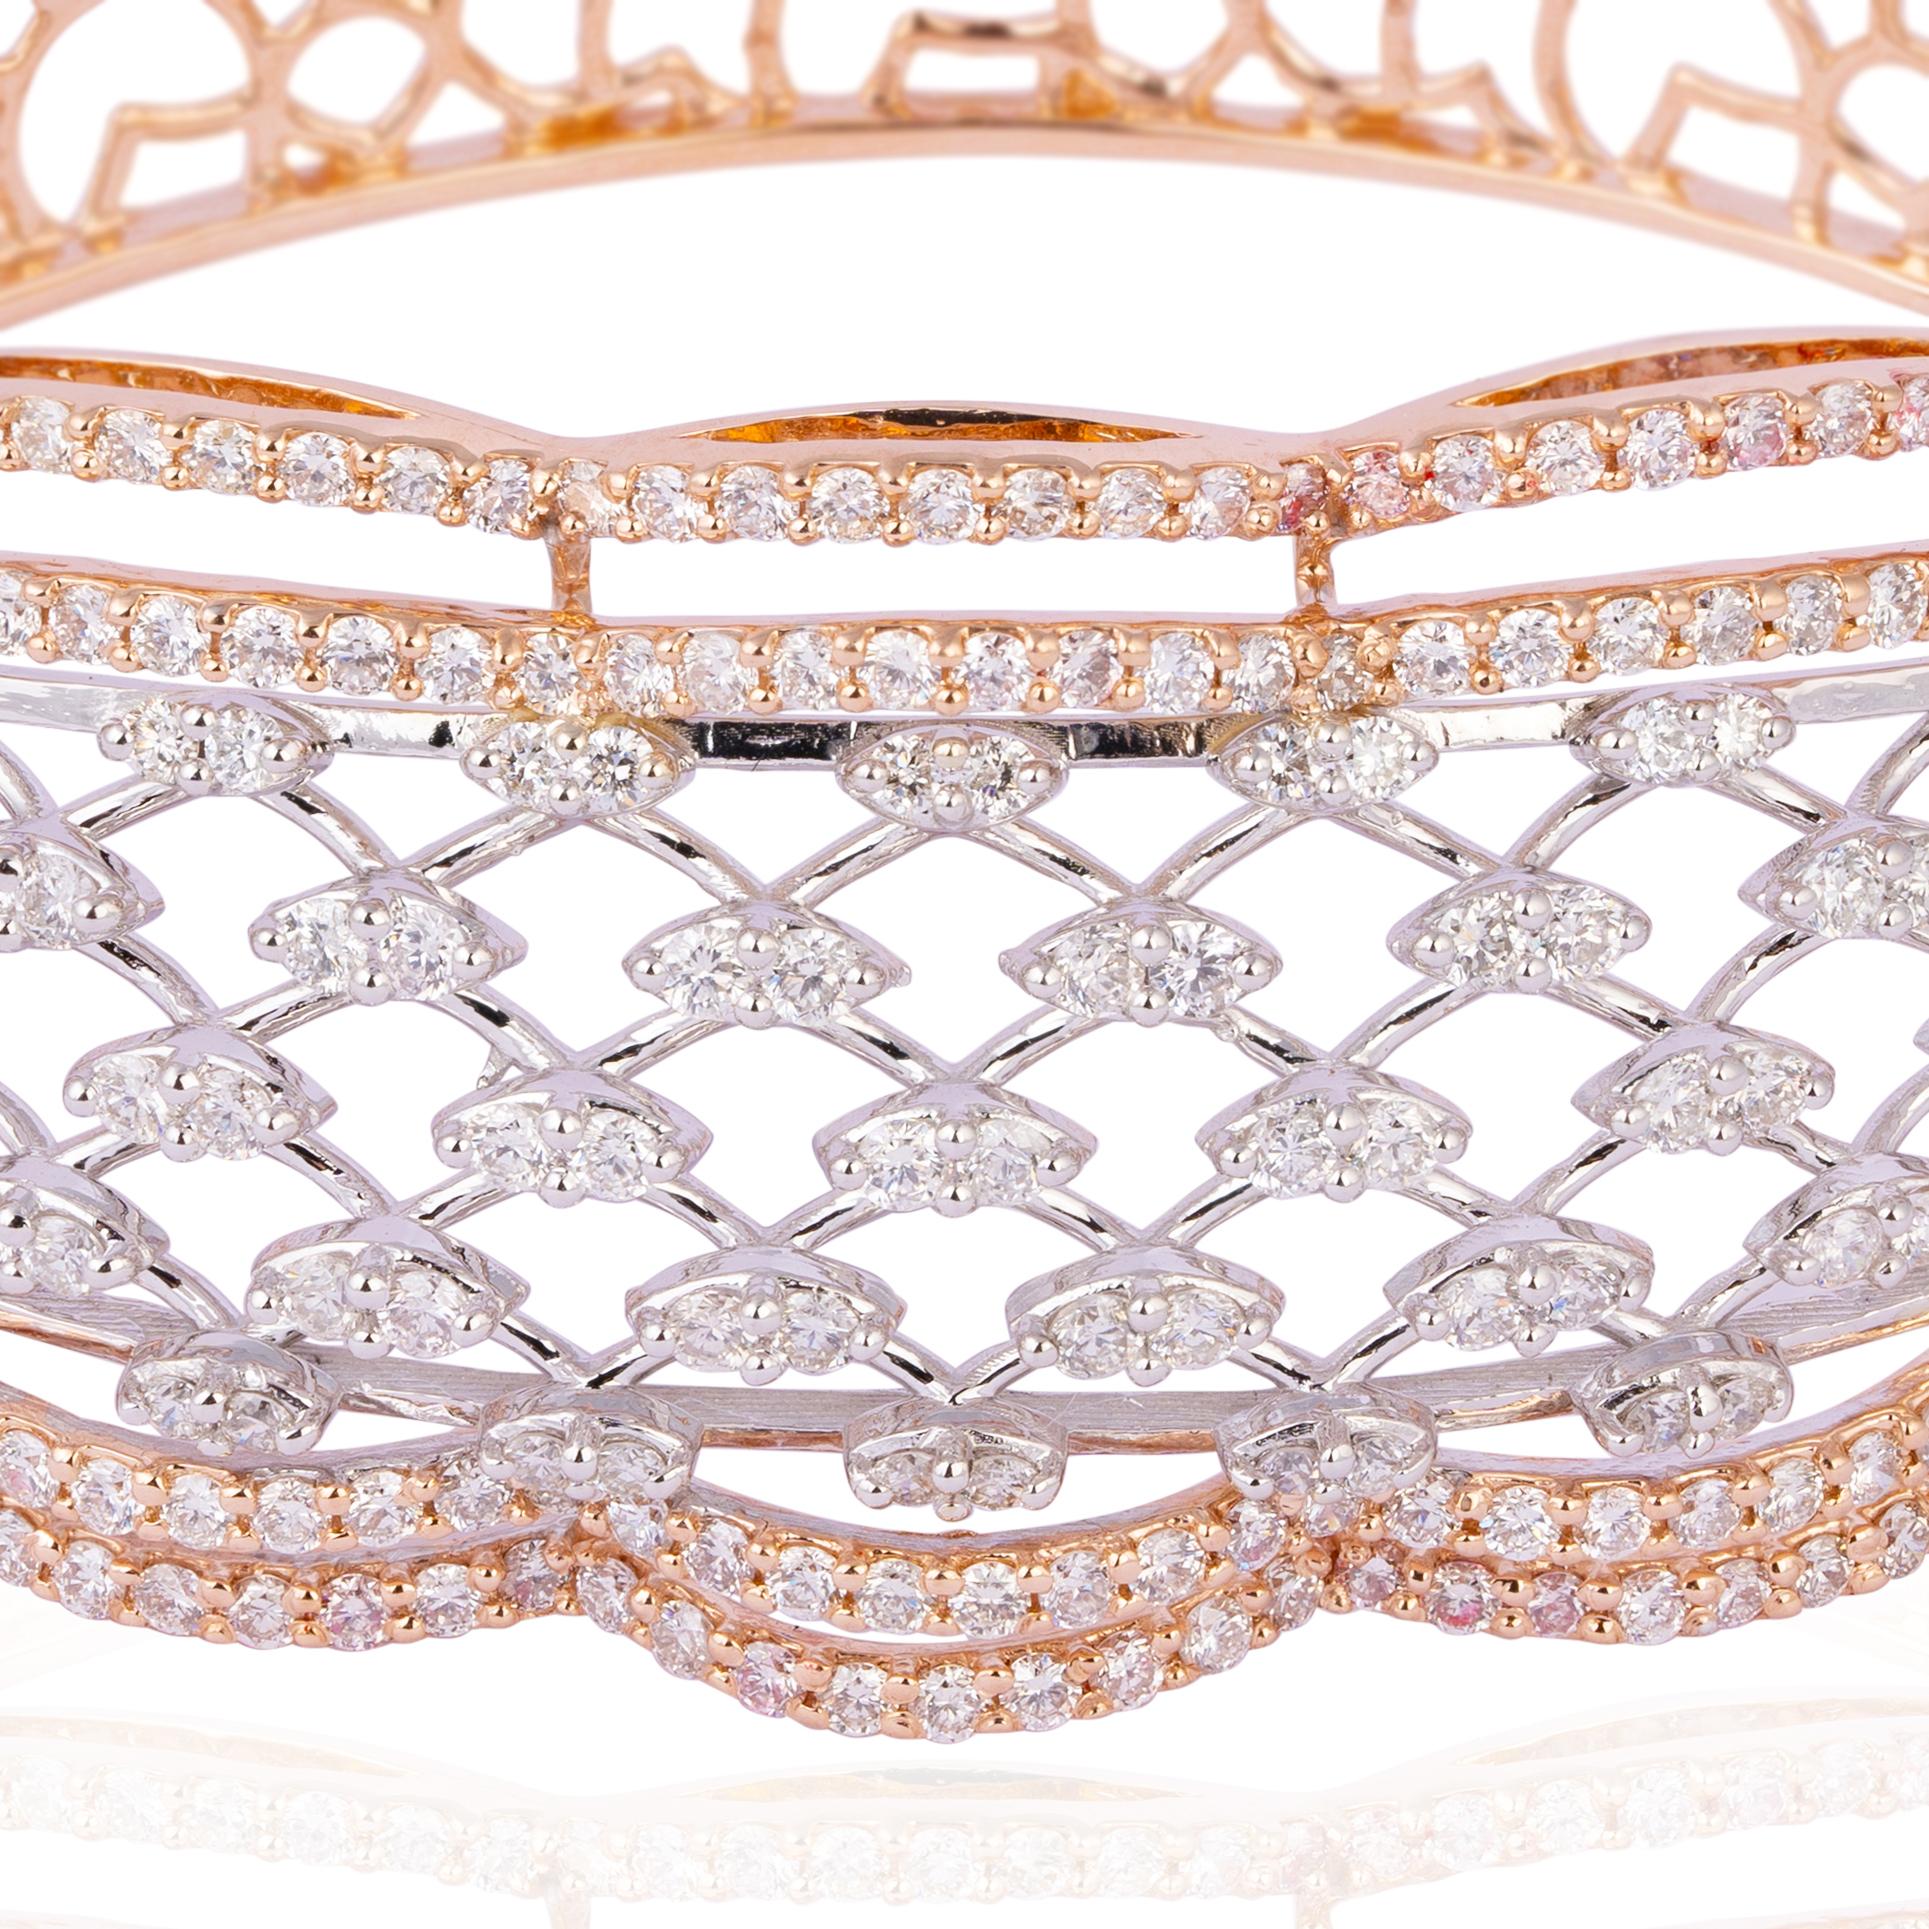 Diamond bracelet with diamonds in 14k gold